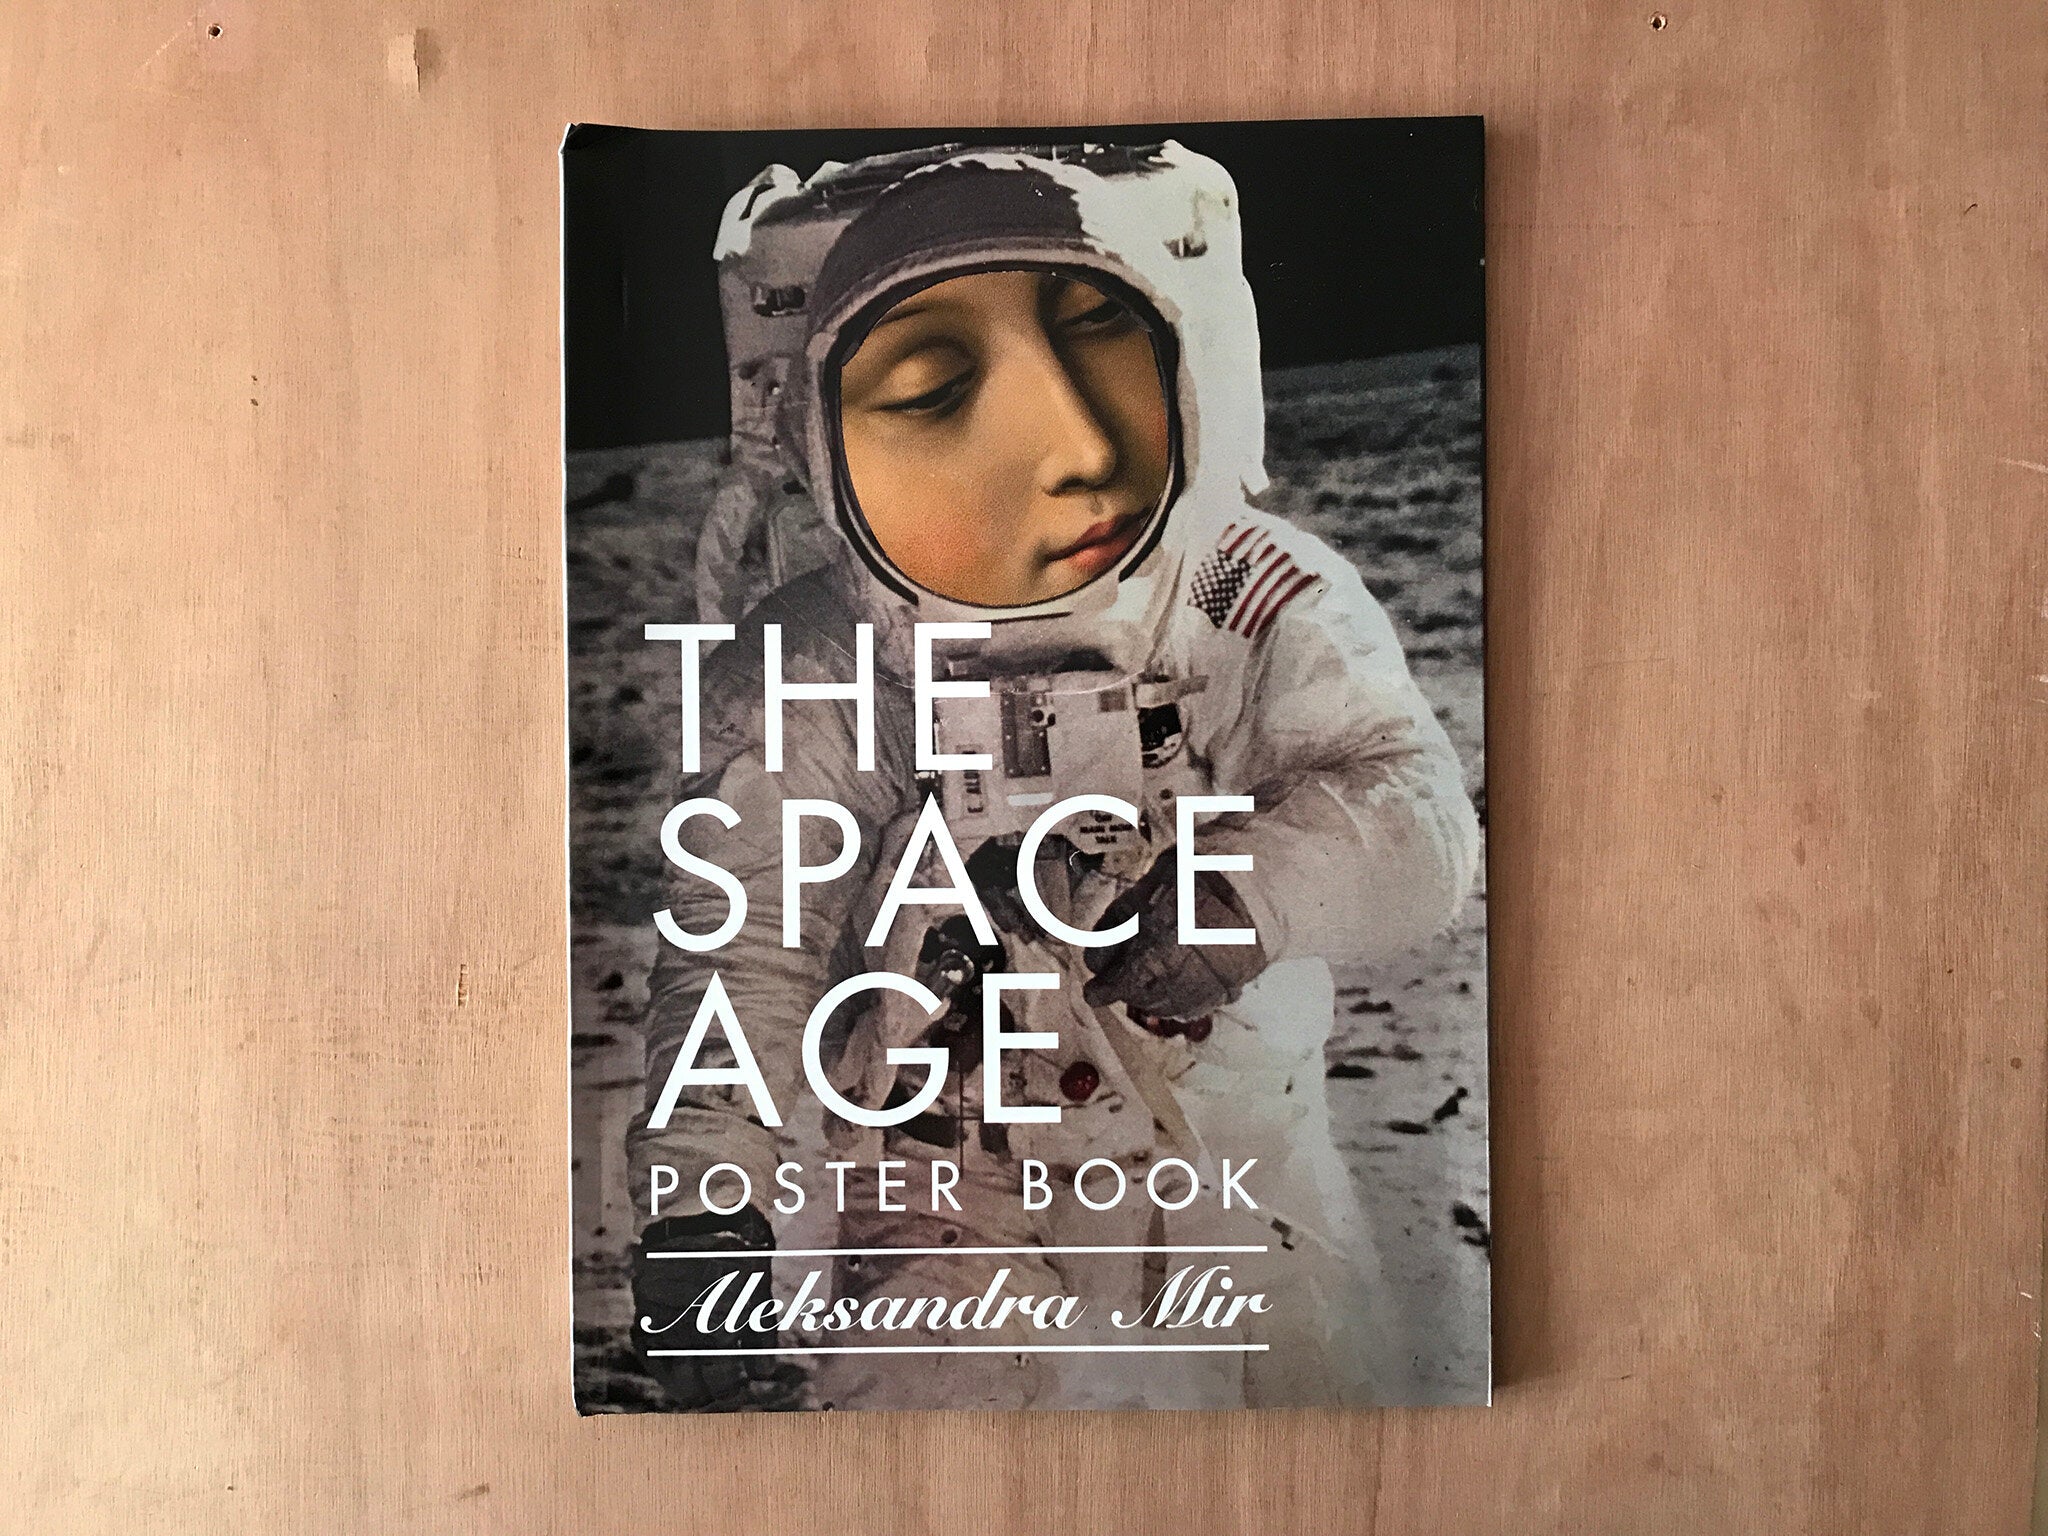 THE SPACE AGE by Aleksandra Mir